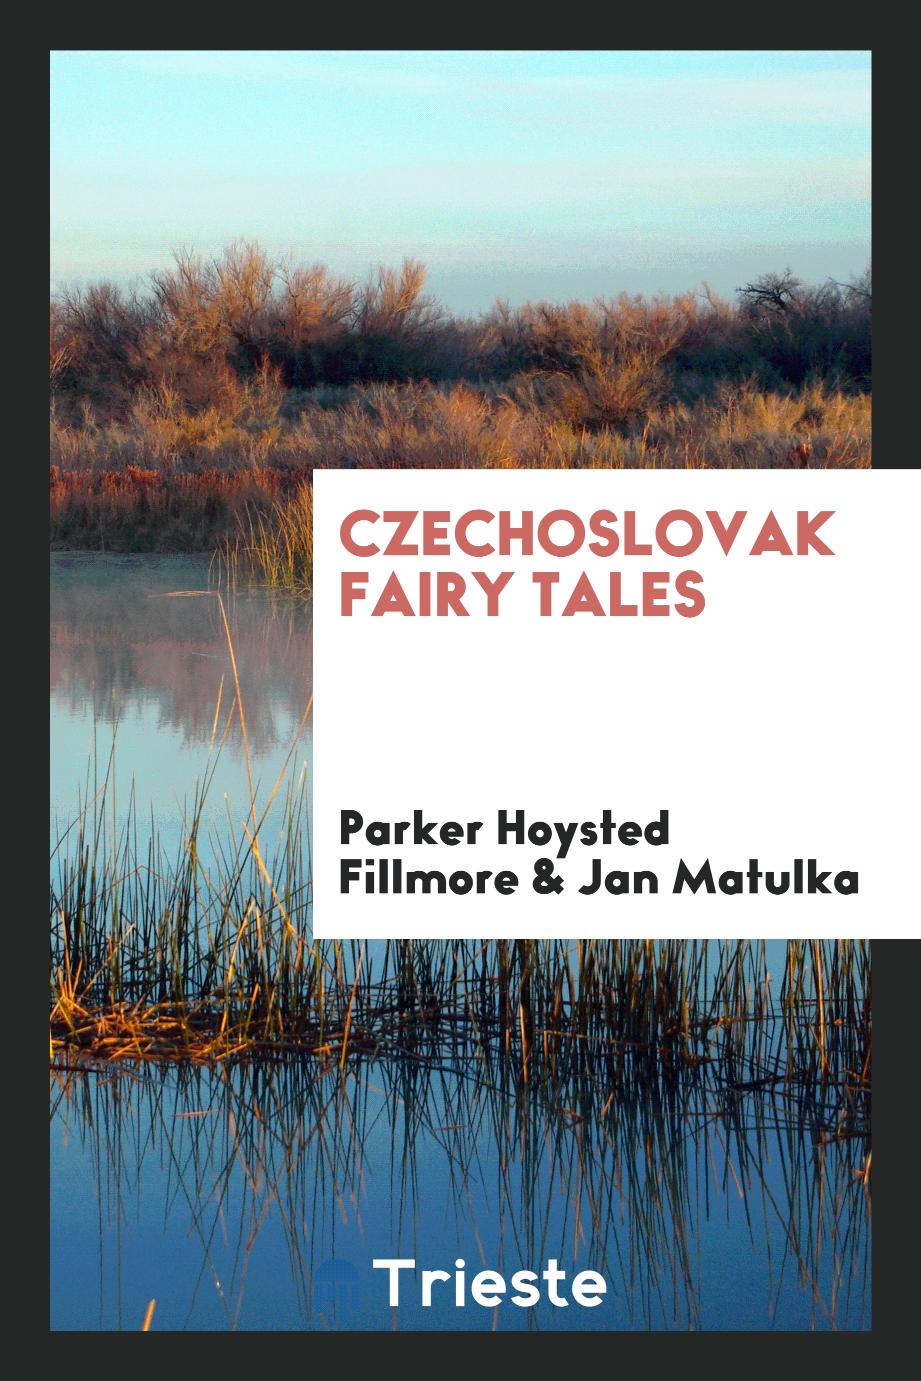 Czechoslovak fairy tales